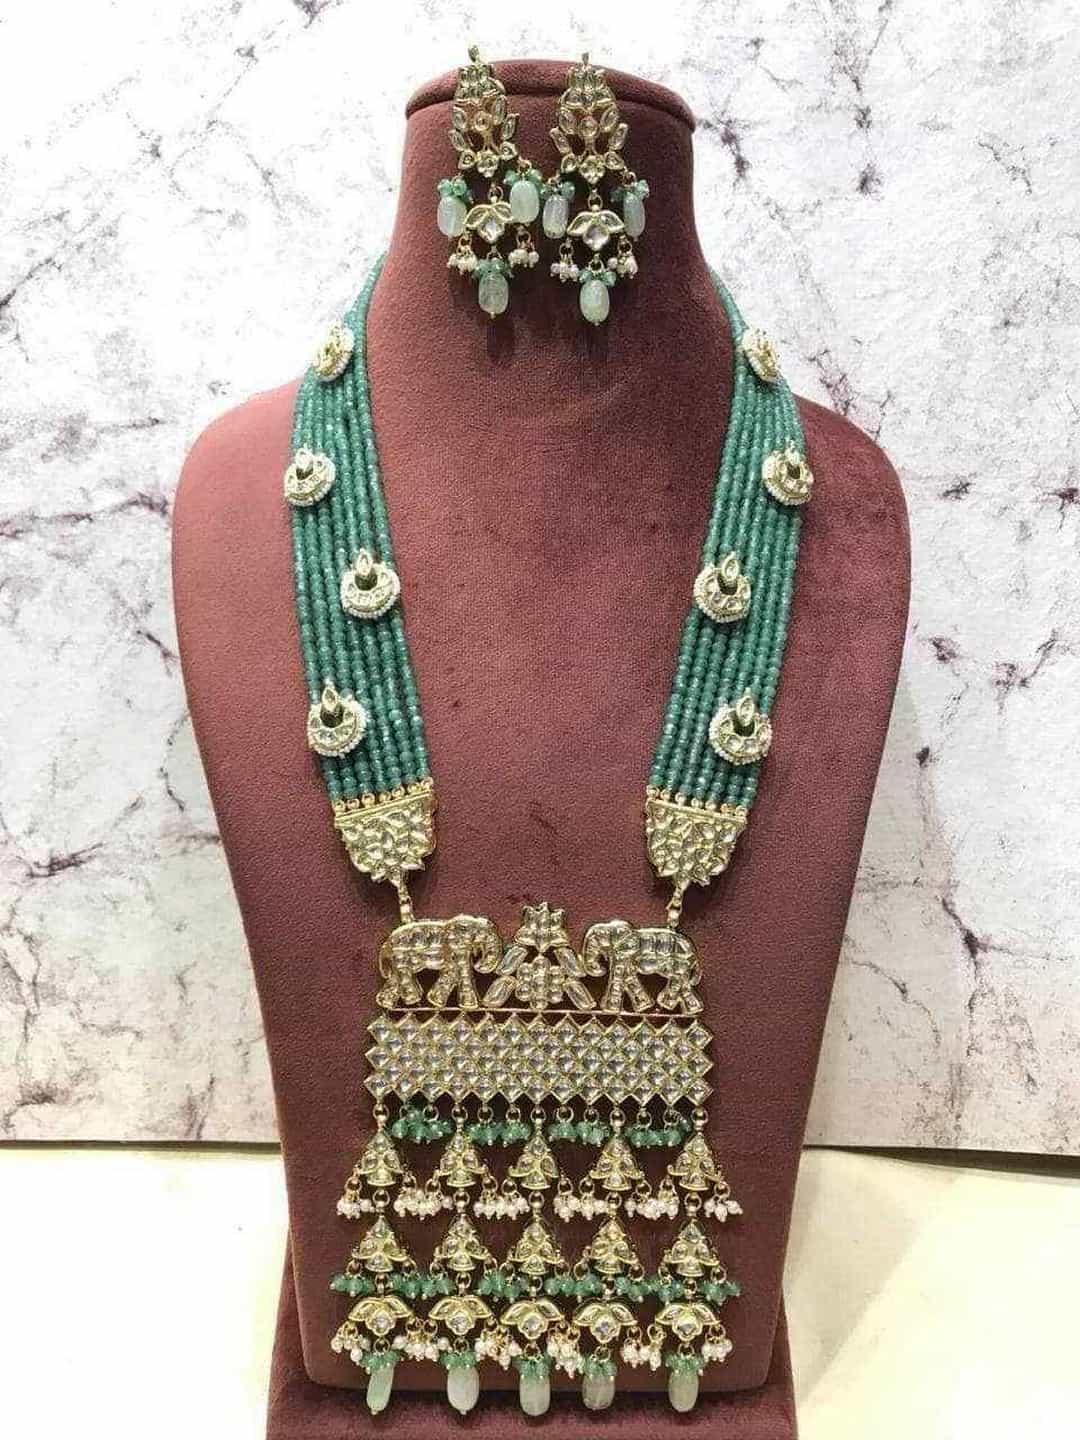 Ishhaara Light Green Masoom Minawala in Elephant Pendant Necklace